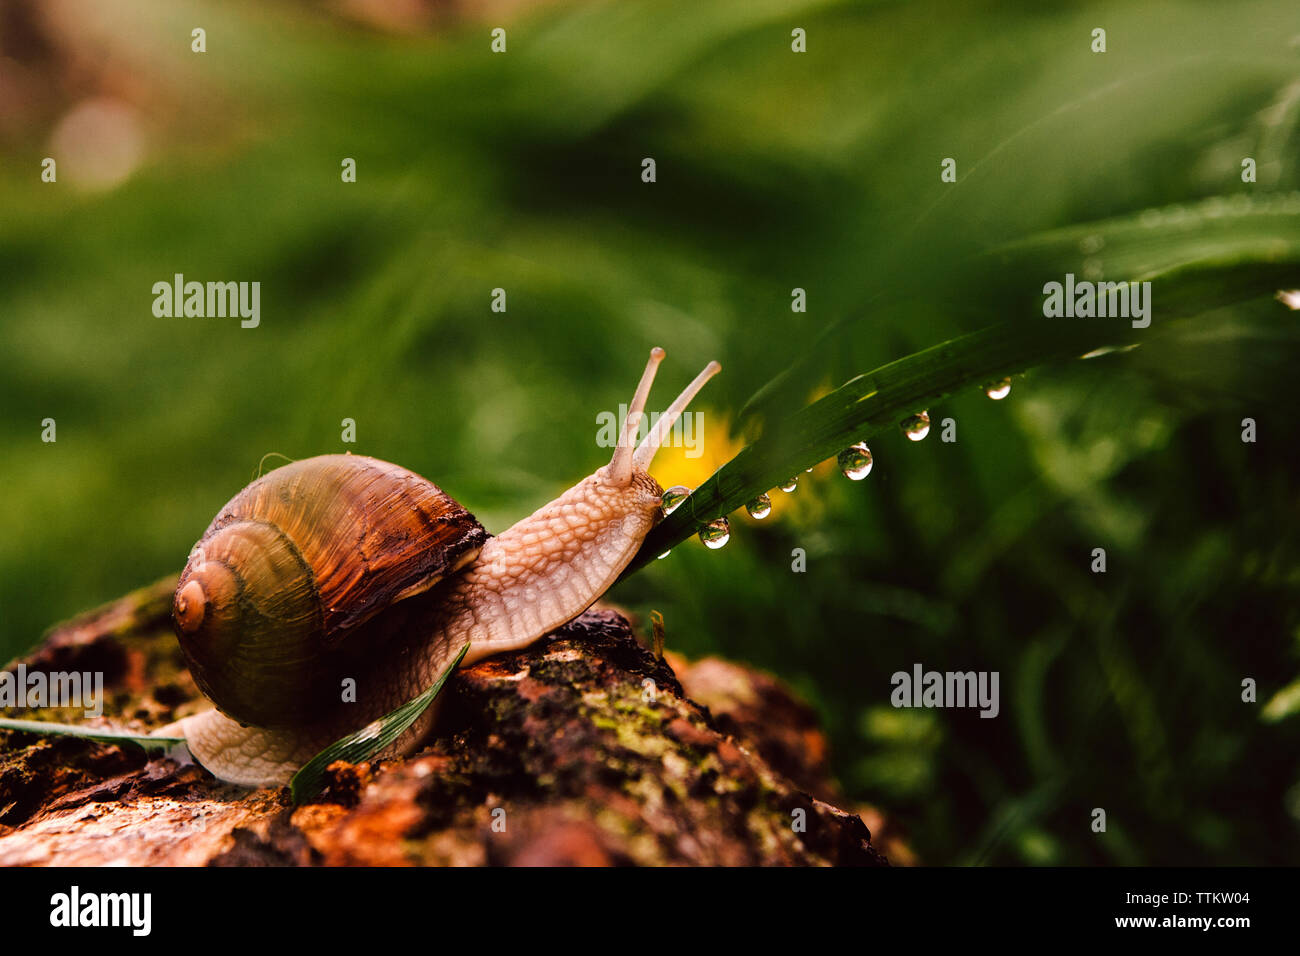 Close-up of snail on wet leaf during rainy season Stock Photo